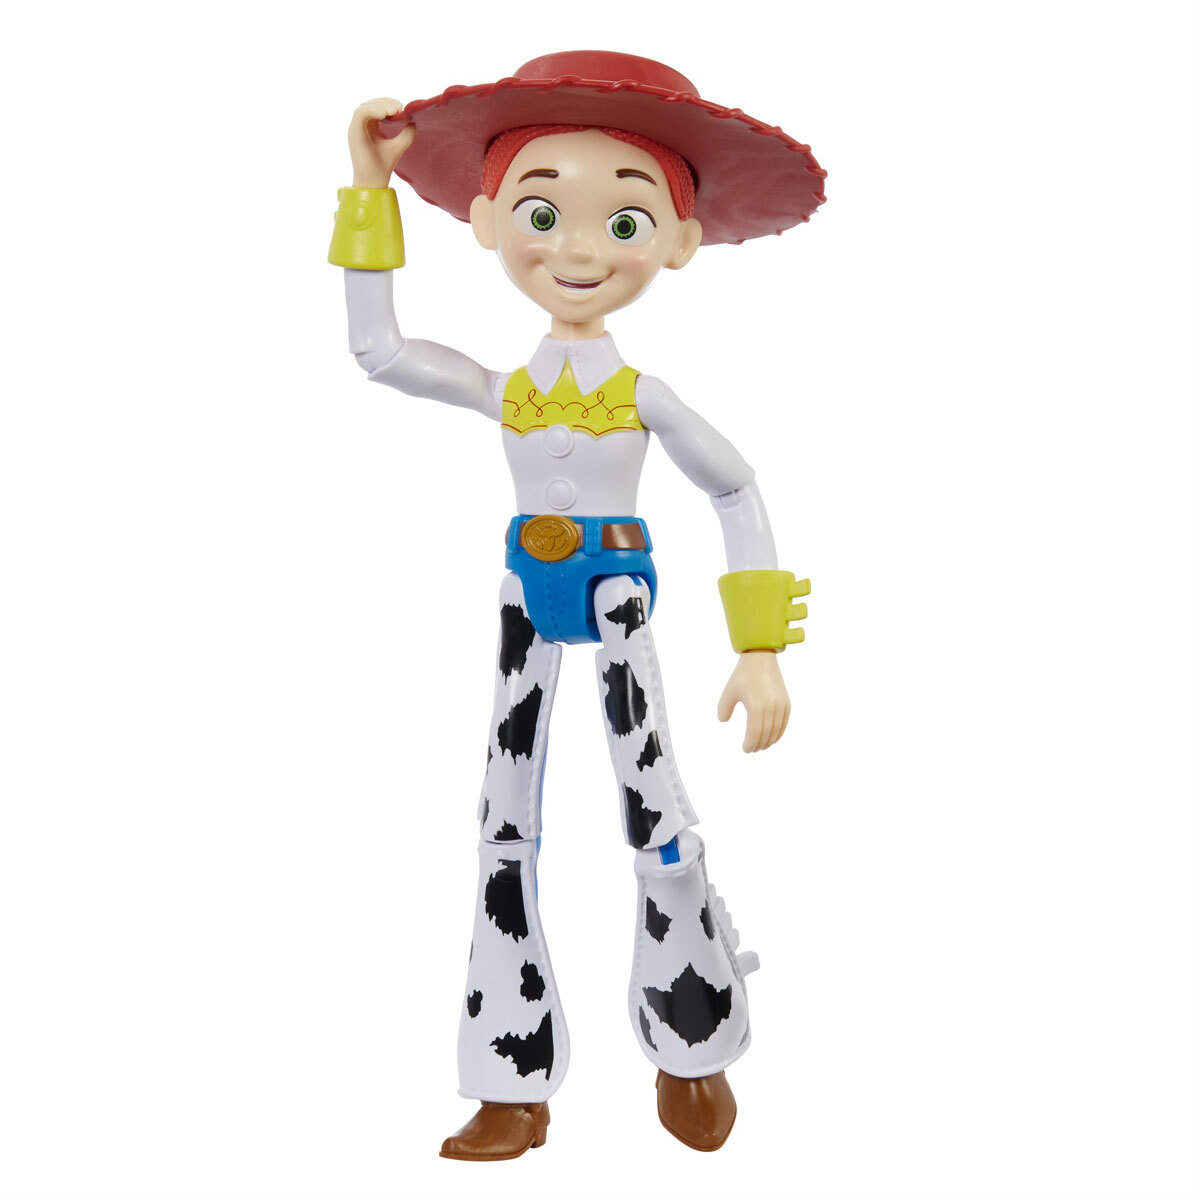  Disney Pixar Toy Story Jessie Collectible Figure